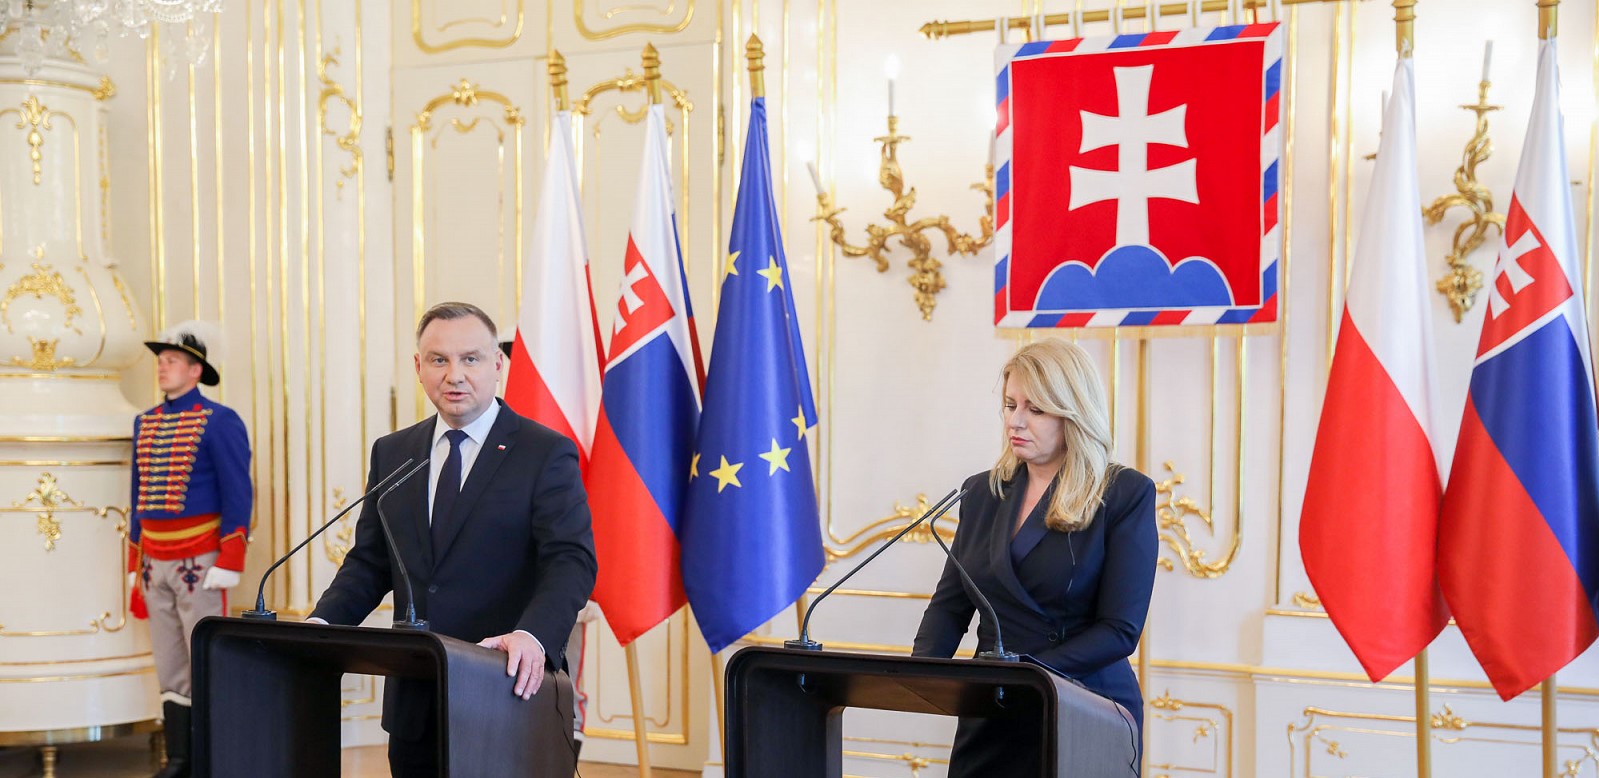 Gas interconnector to soon link Poland and Slovakia, says Polish President